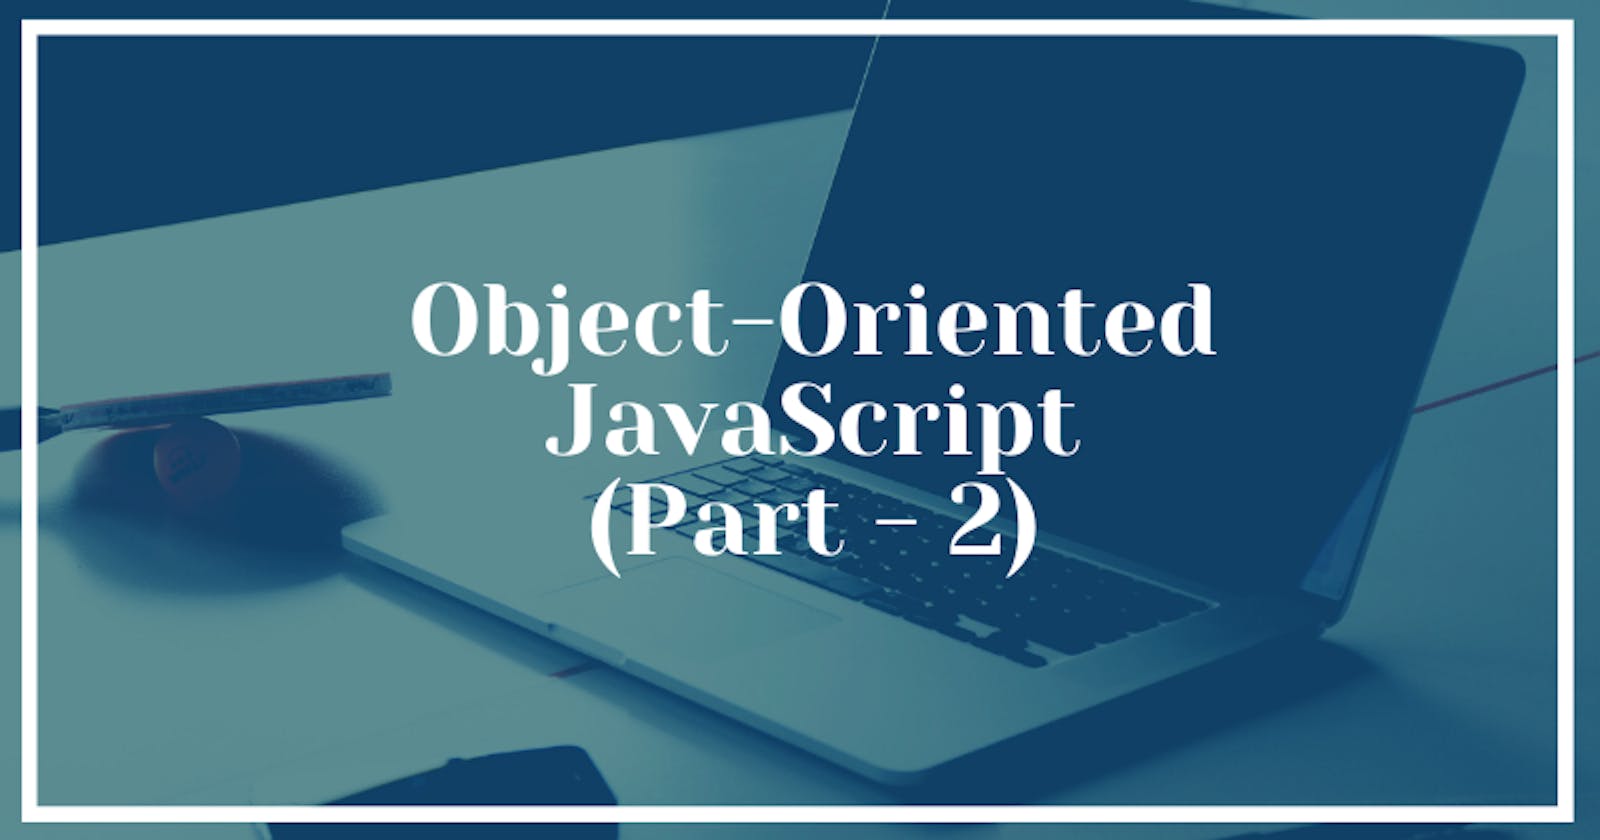 Object-Oriented JavaScript (Part - 2)